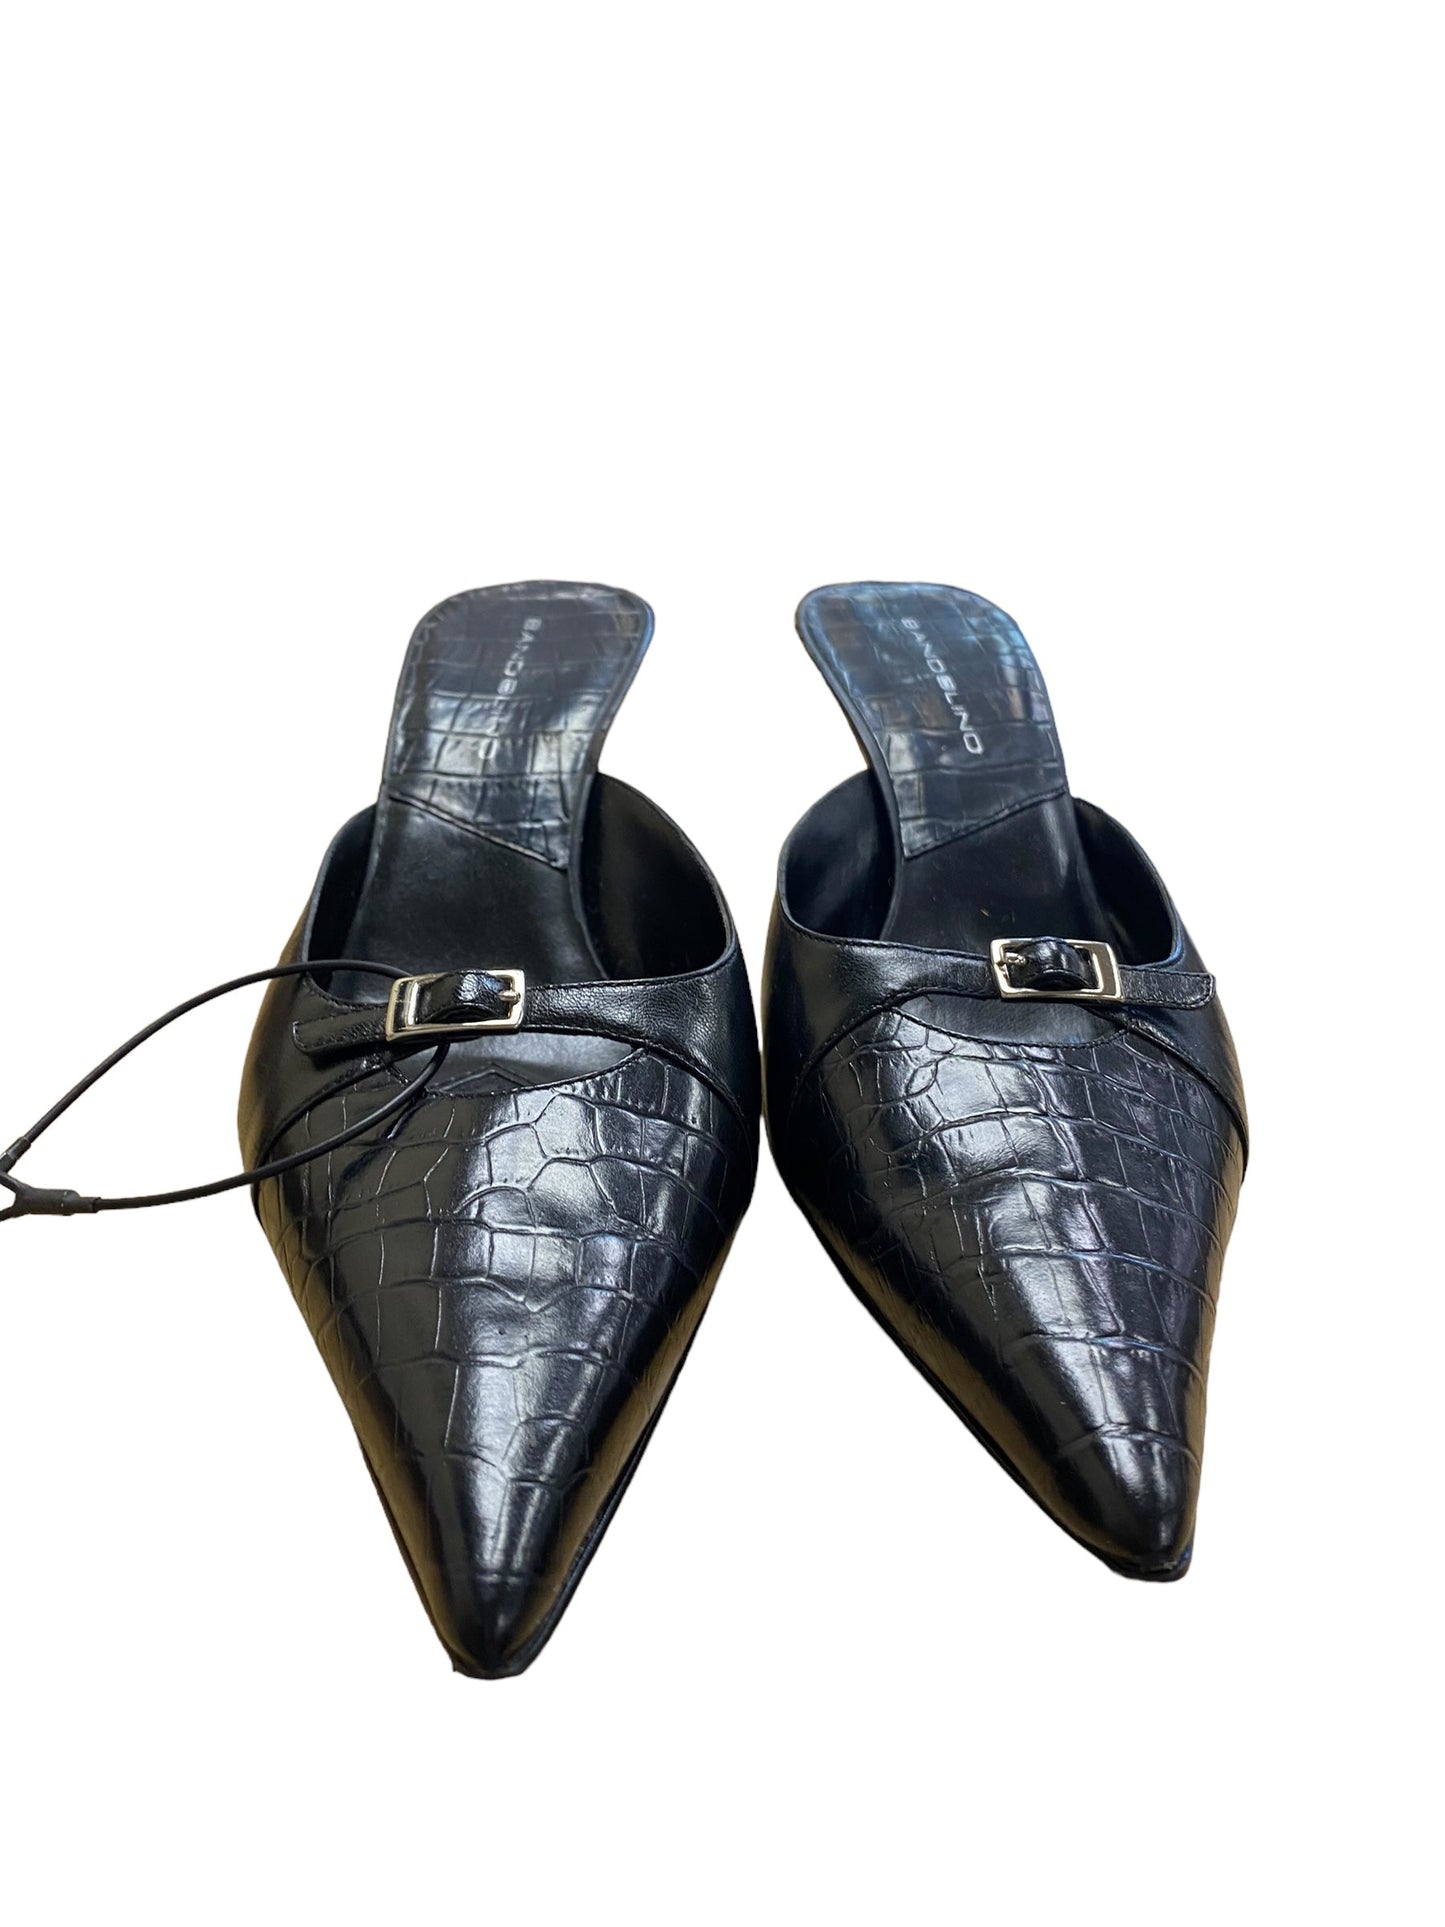 Shoes Heels Kitten By Bandolino  Size: 9